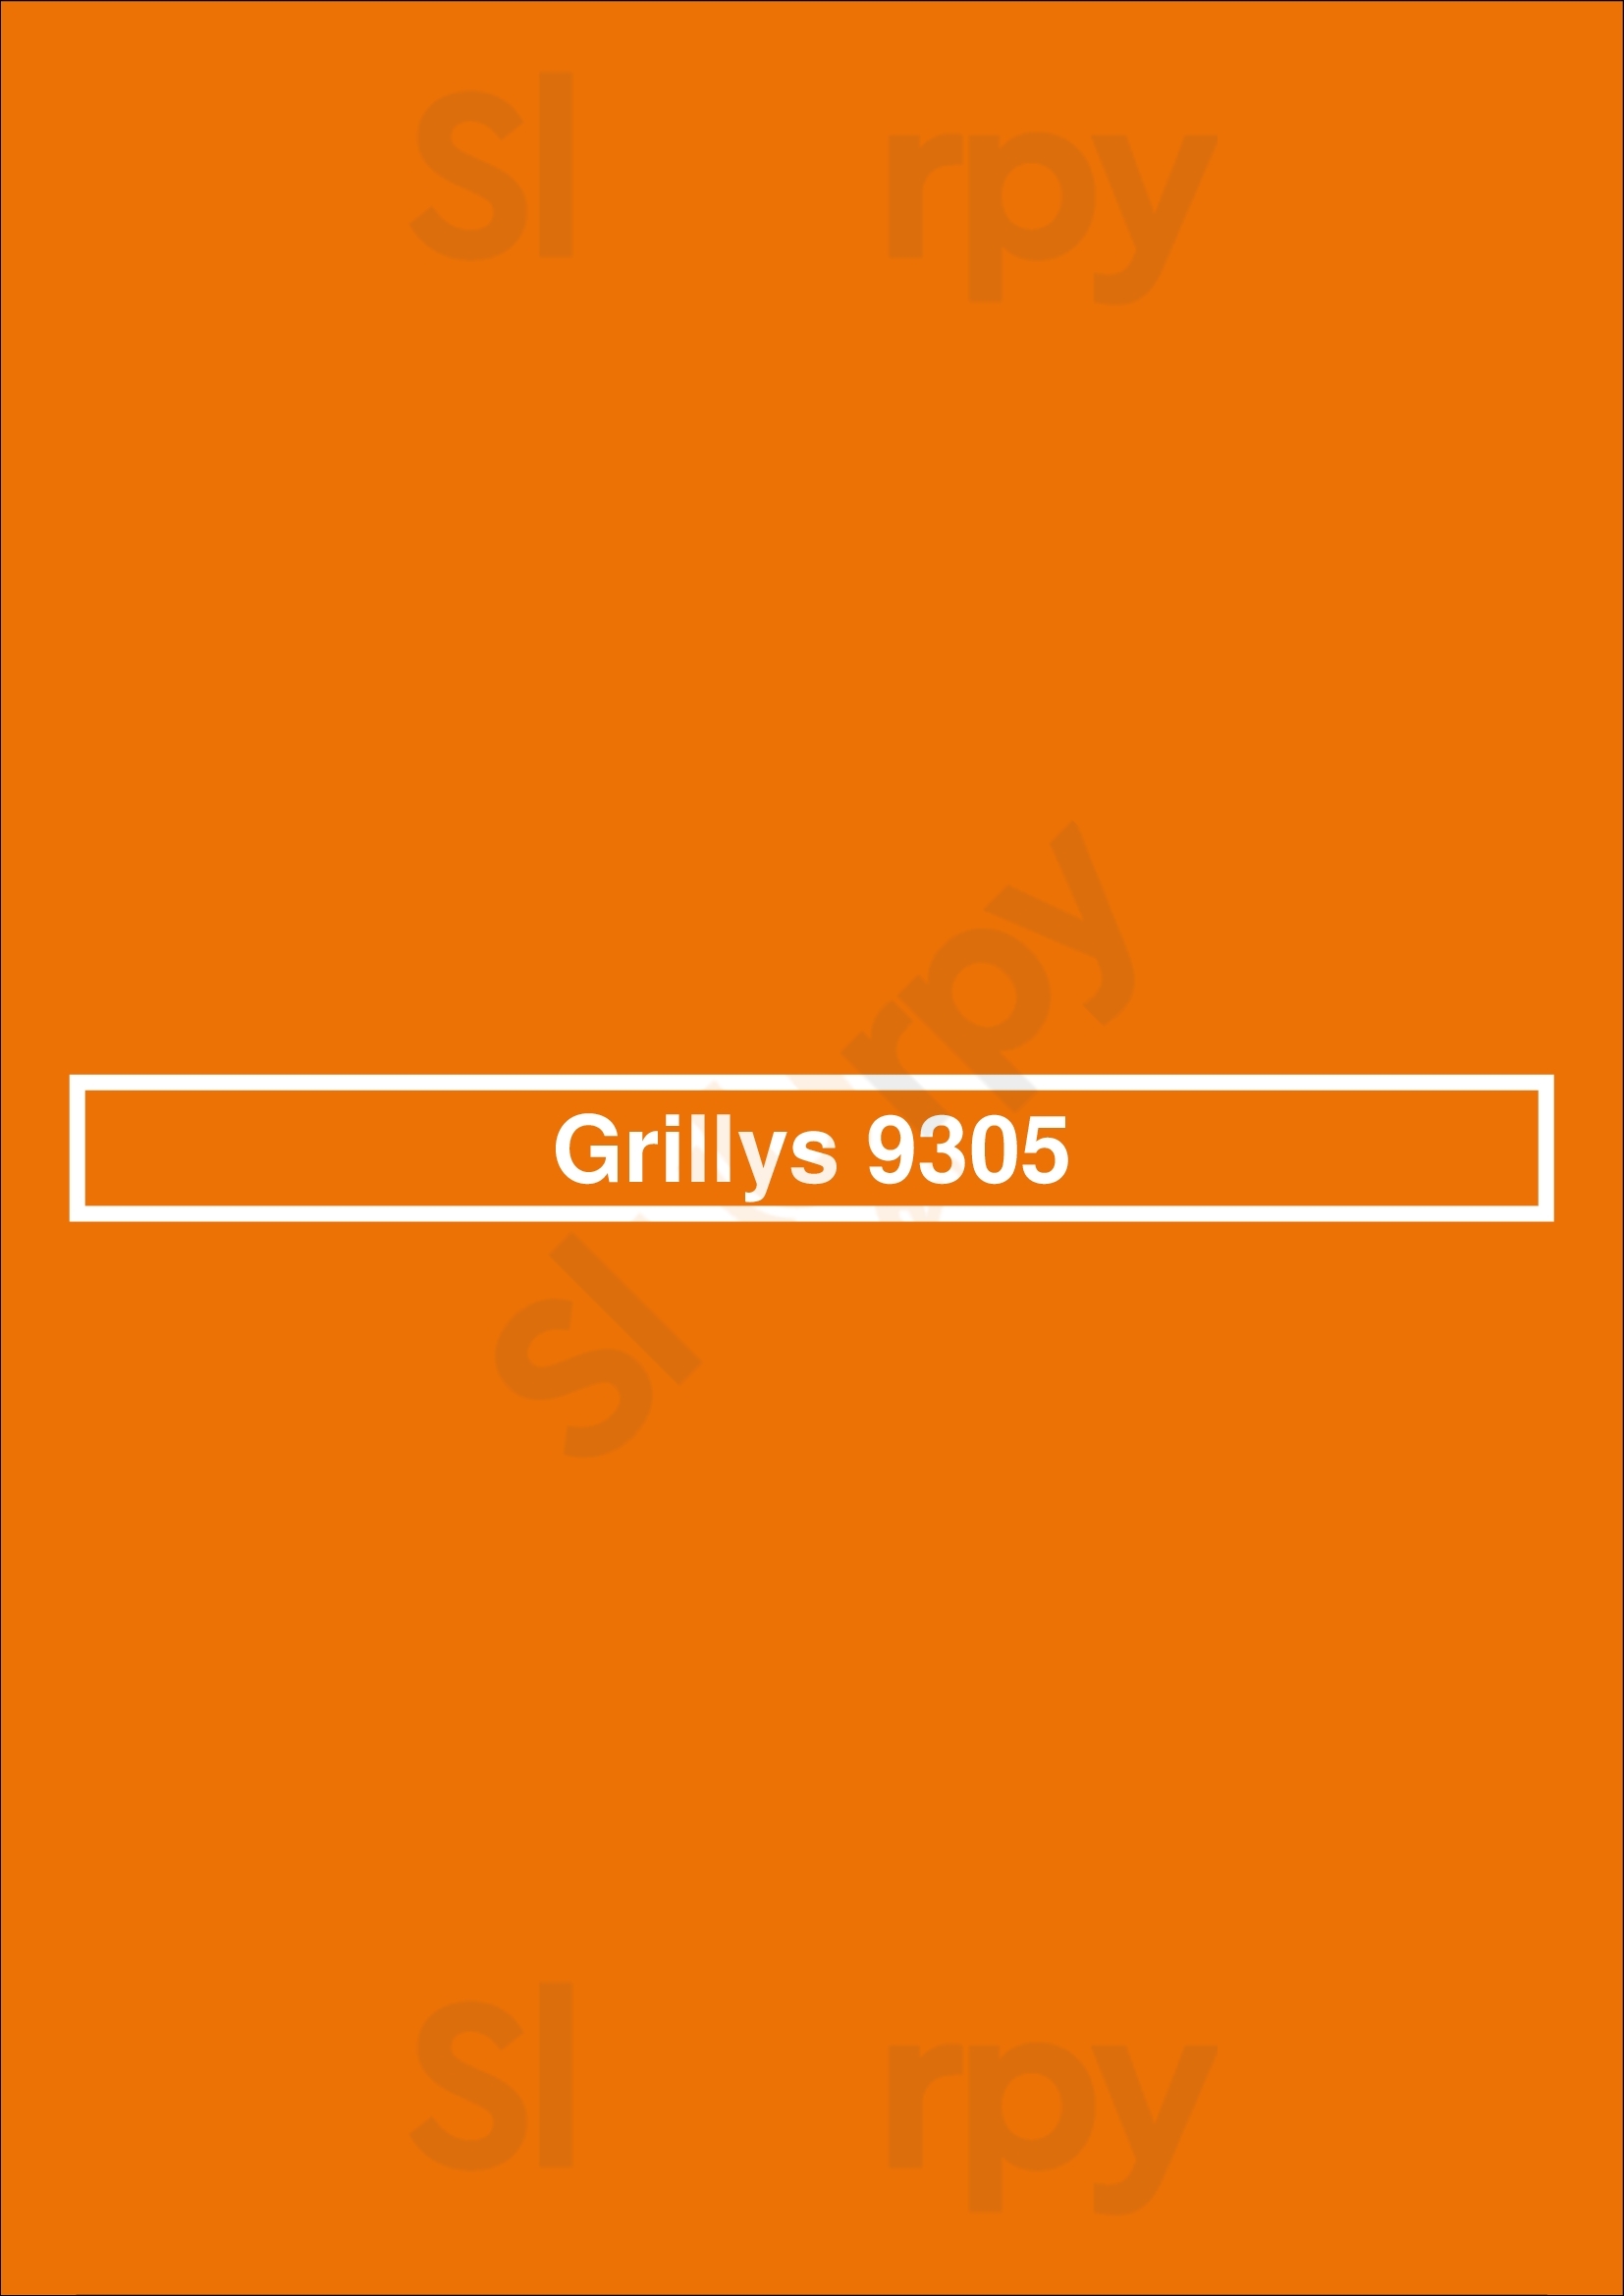 Grillys 9305 Montreal Menu - 1